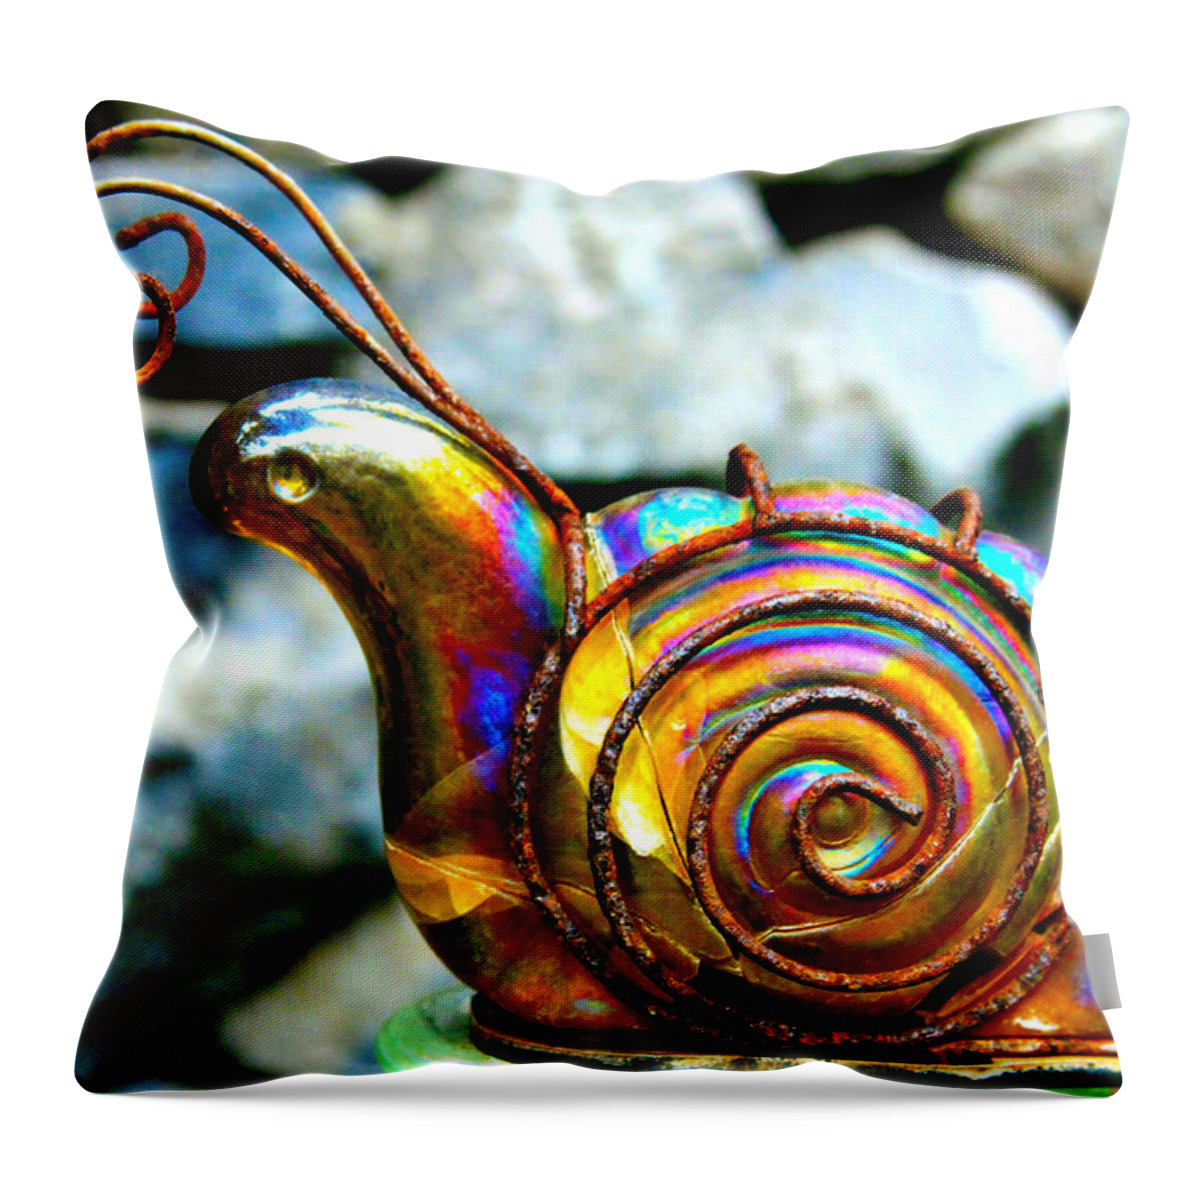 Snail Throw Pillow featuring the photograph Glass Snail Garden Art by Karon Melillo DeVega